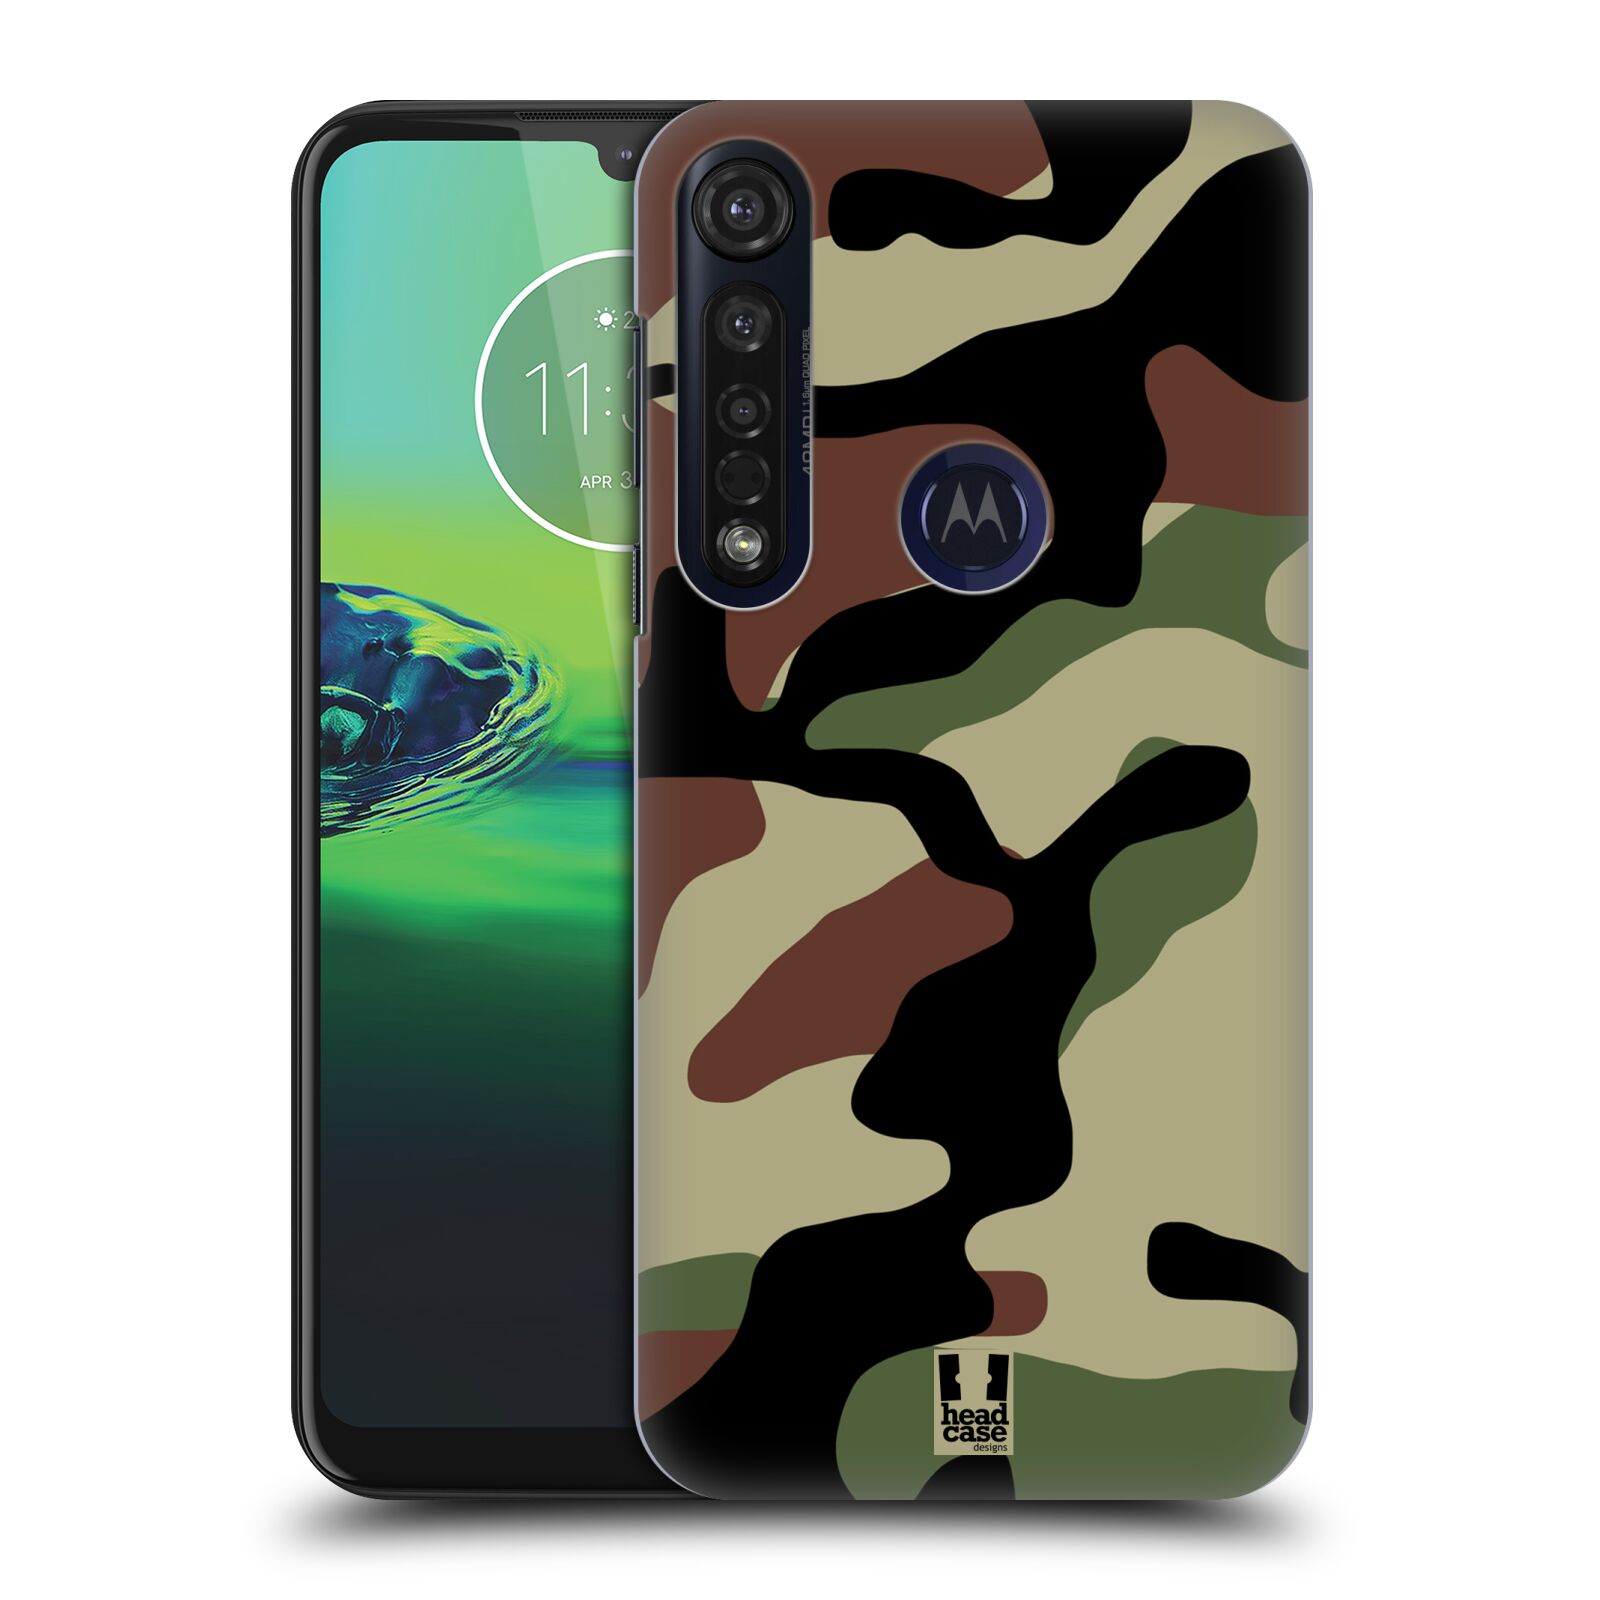 Pouzdro na mobil Motorola Moto G8 PLUS - HEAD CASE - Kamufláž les